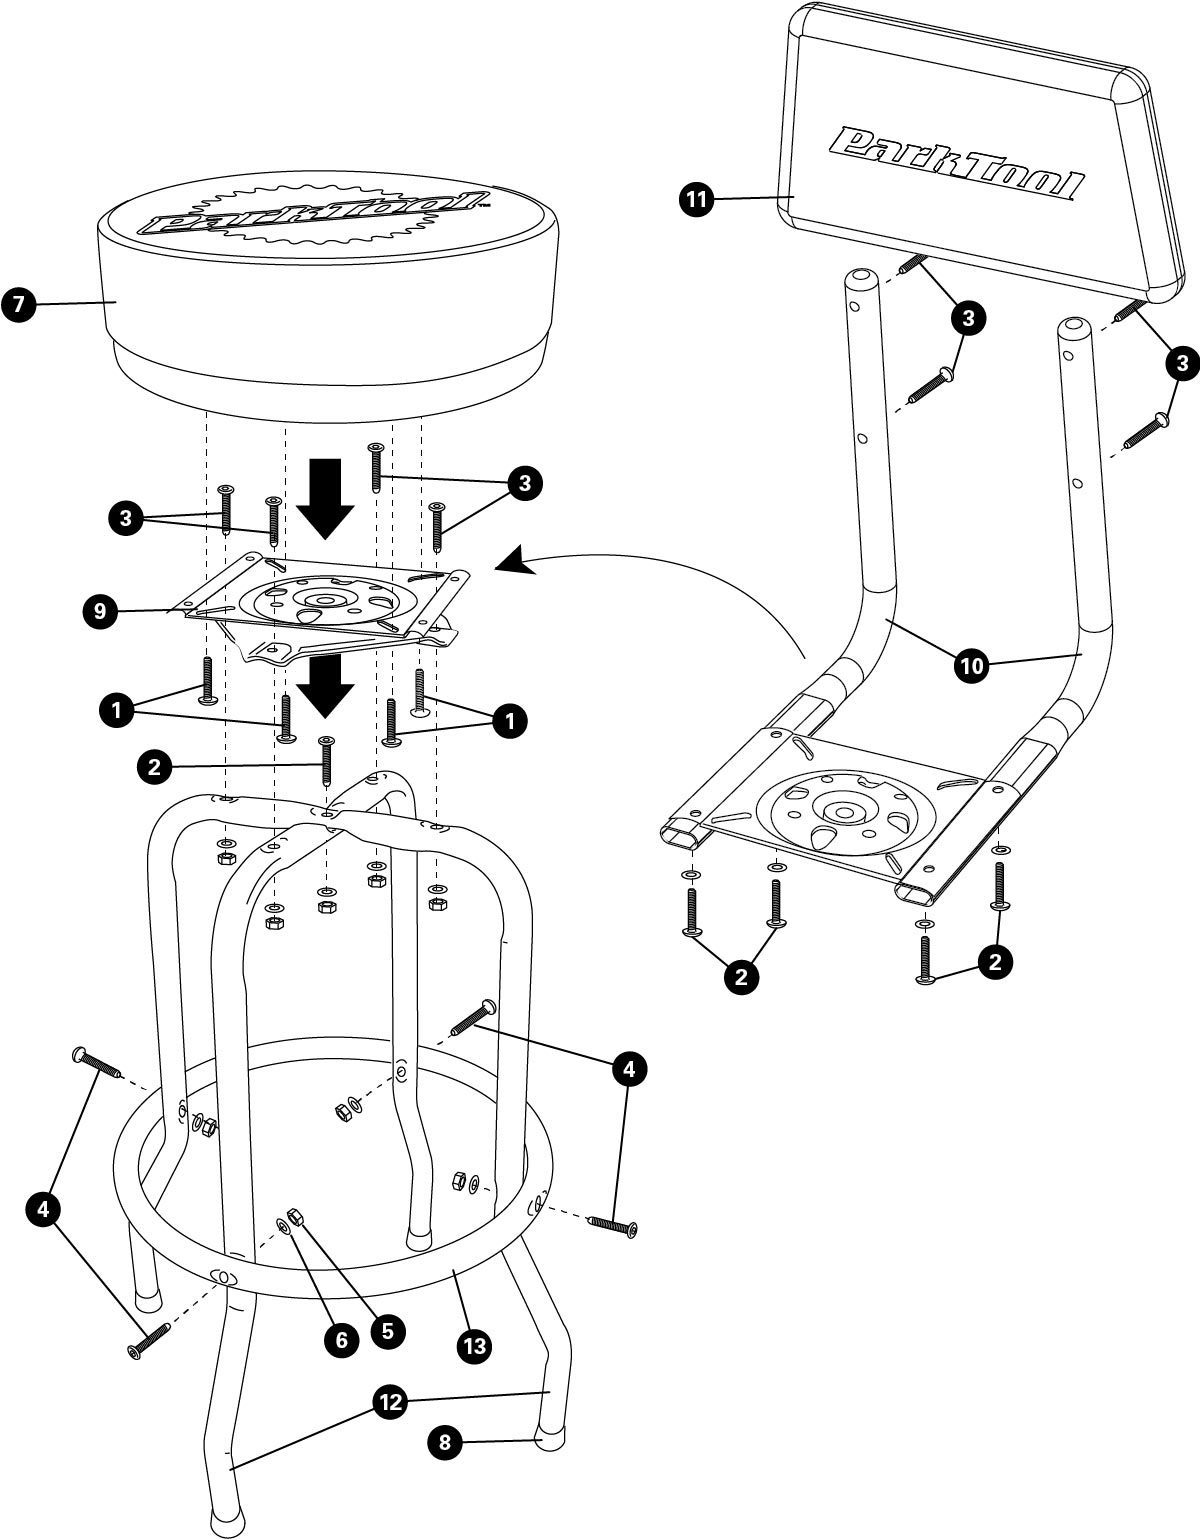 Parts diagram for STL-1.2 Shop Stool, click to enlarge